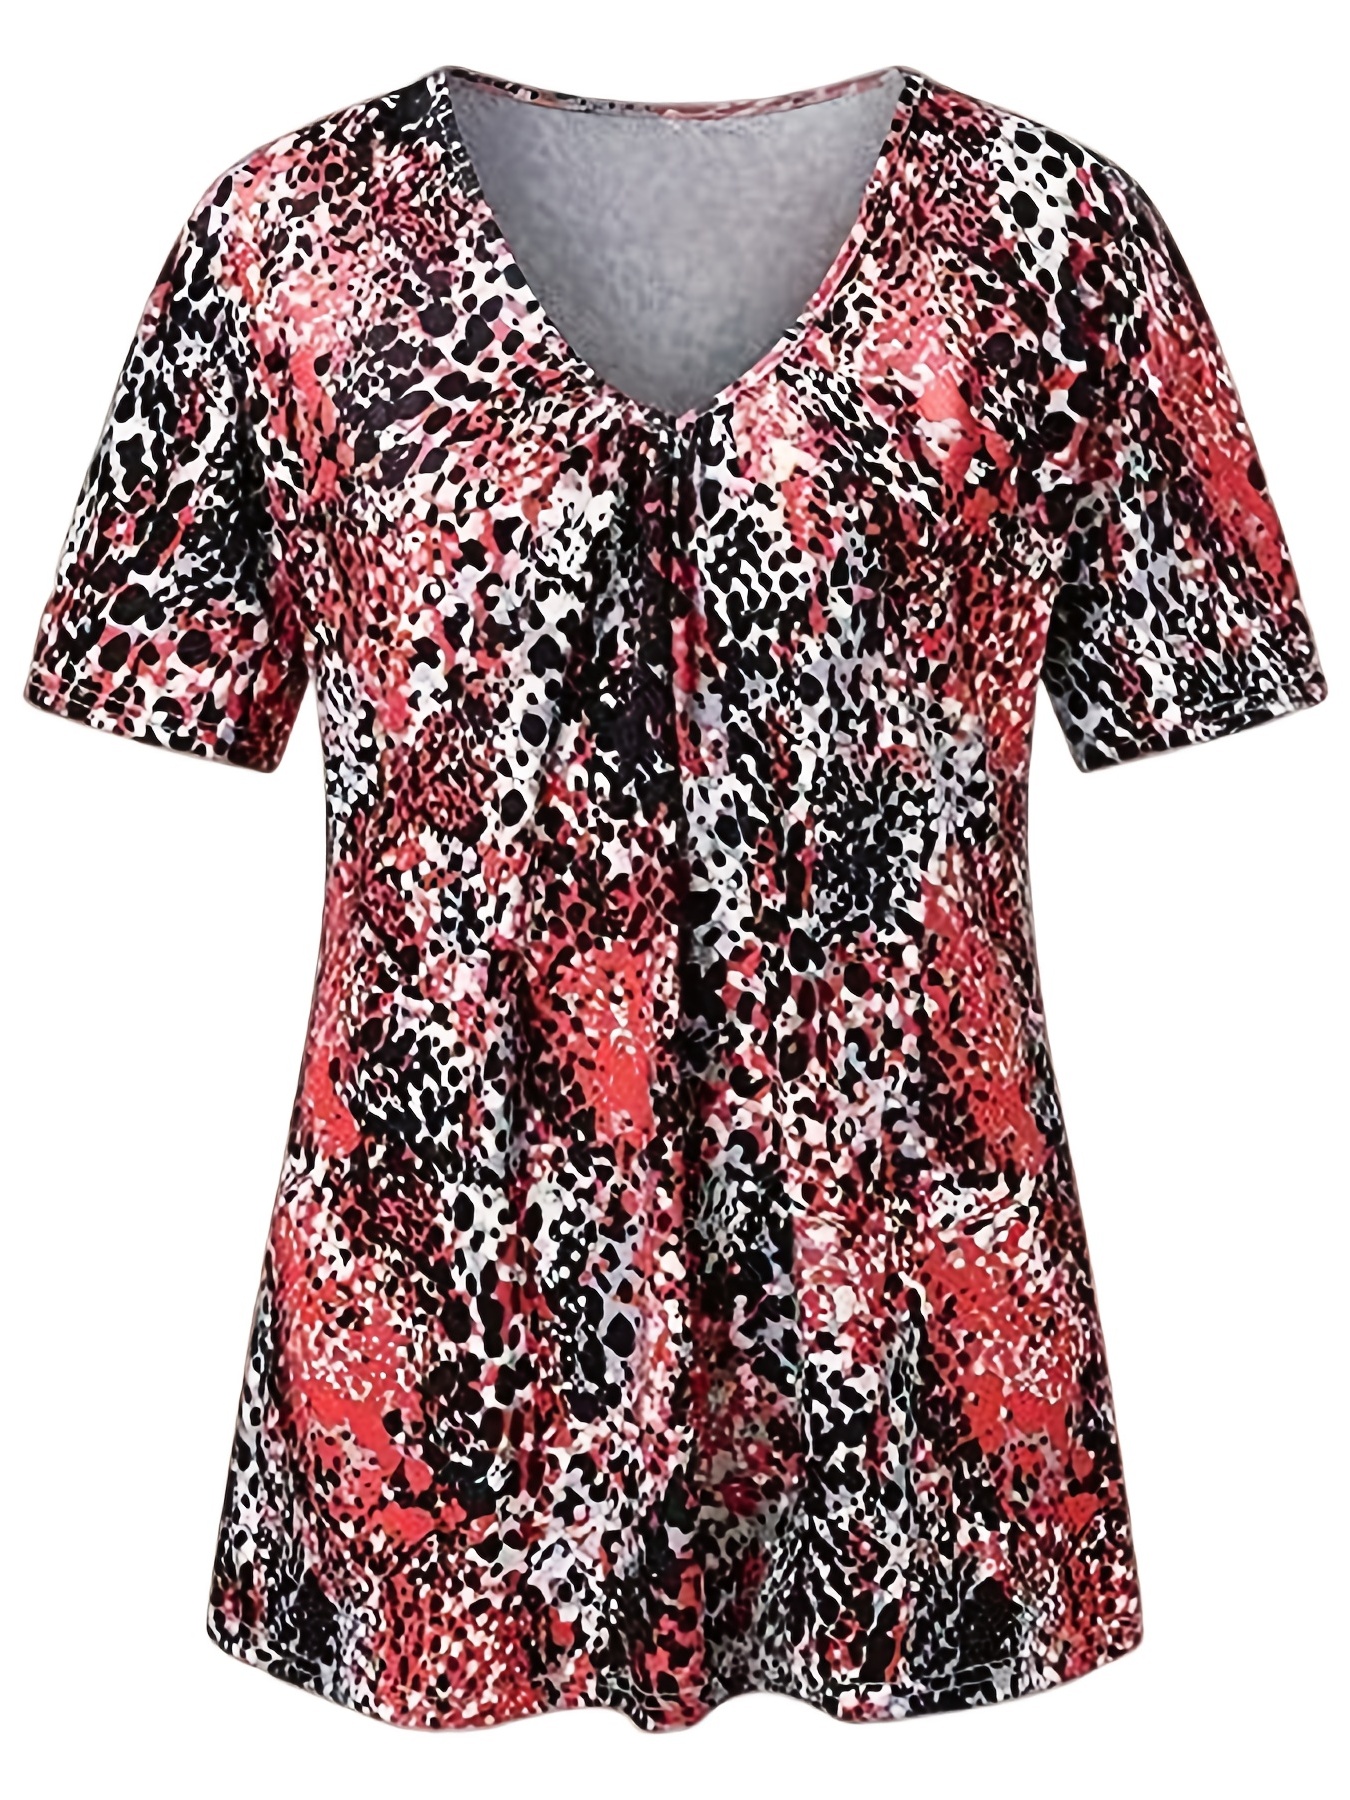 CTEEGC Womens Tops Plus Size Sexy Stripe Leopard Print Shirt Short Sleeve  T-Shirt Blouse Tops 